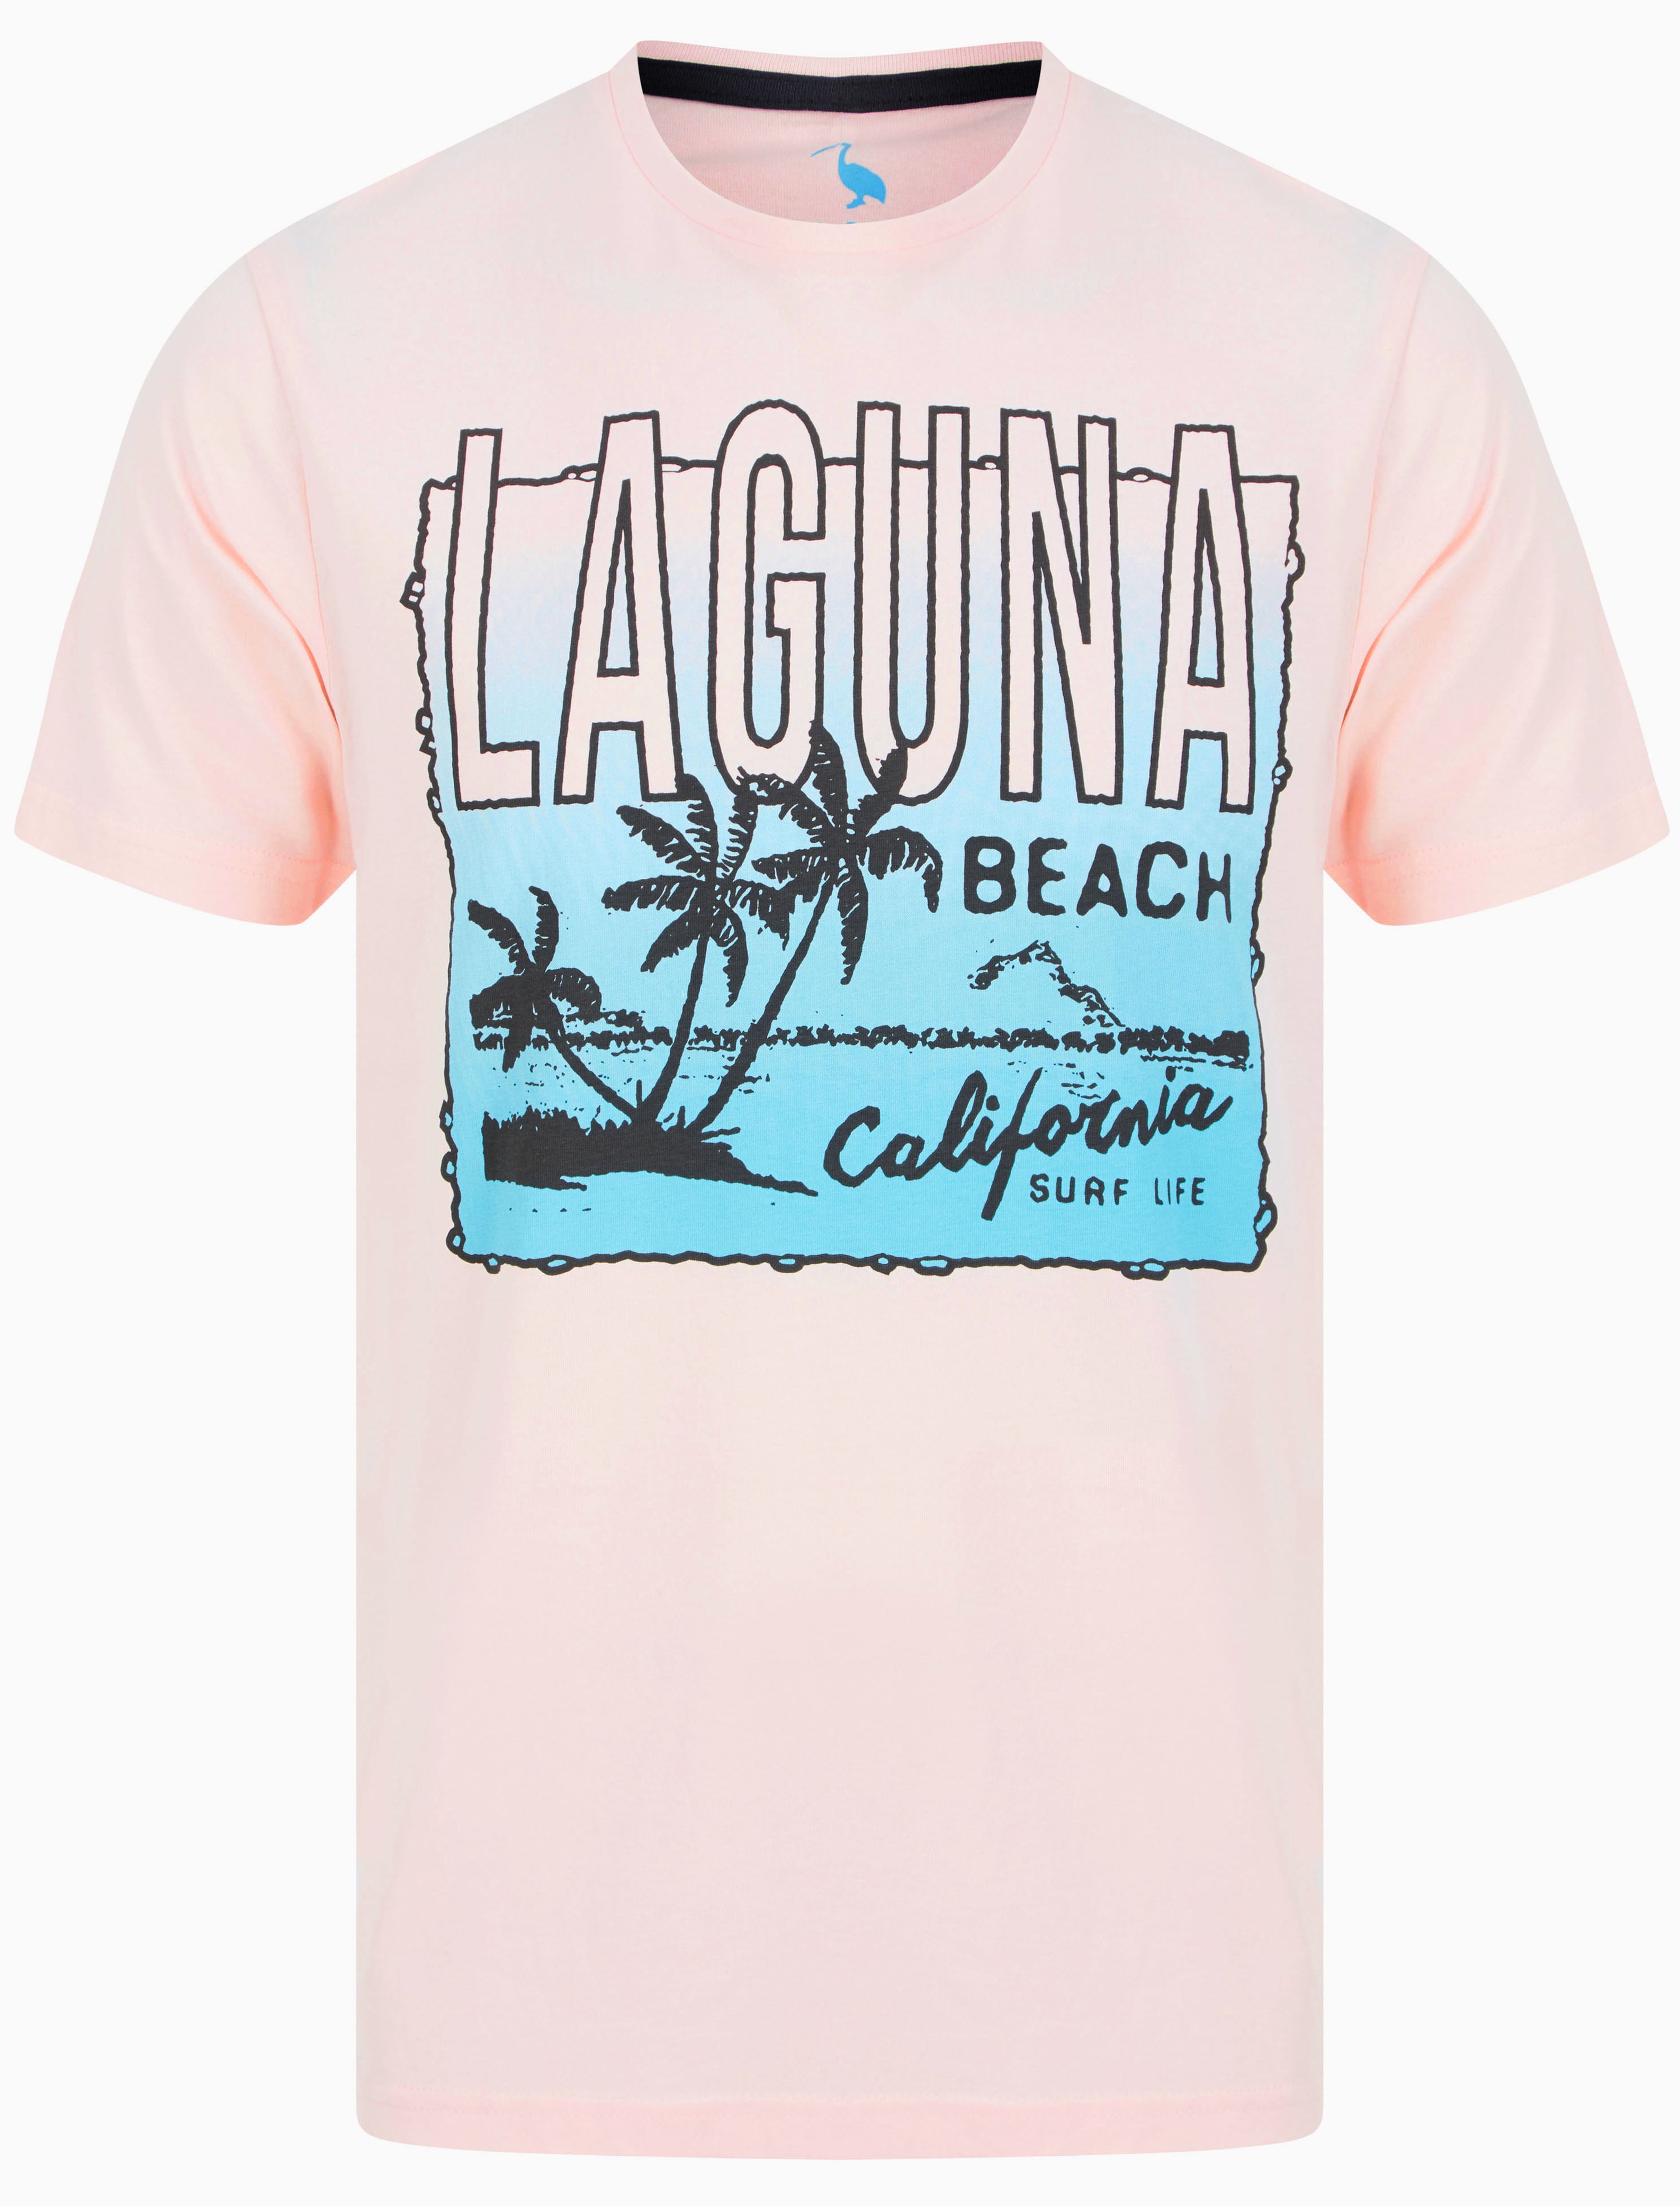 t-shirts laguna motif cotton jersey t-shirt in blushing pink - south shore / s - tokyo laundry